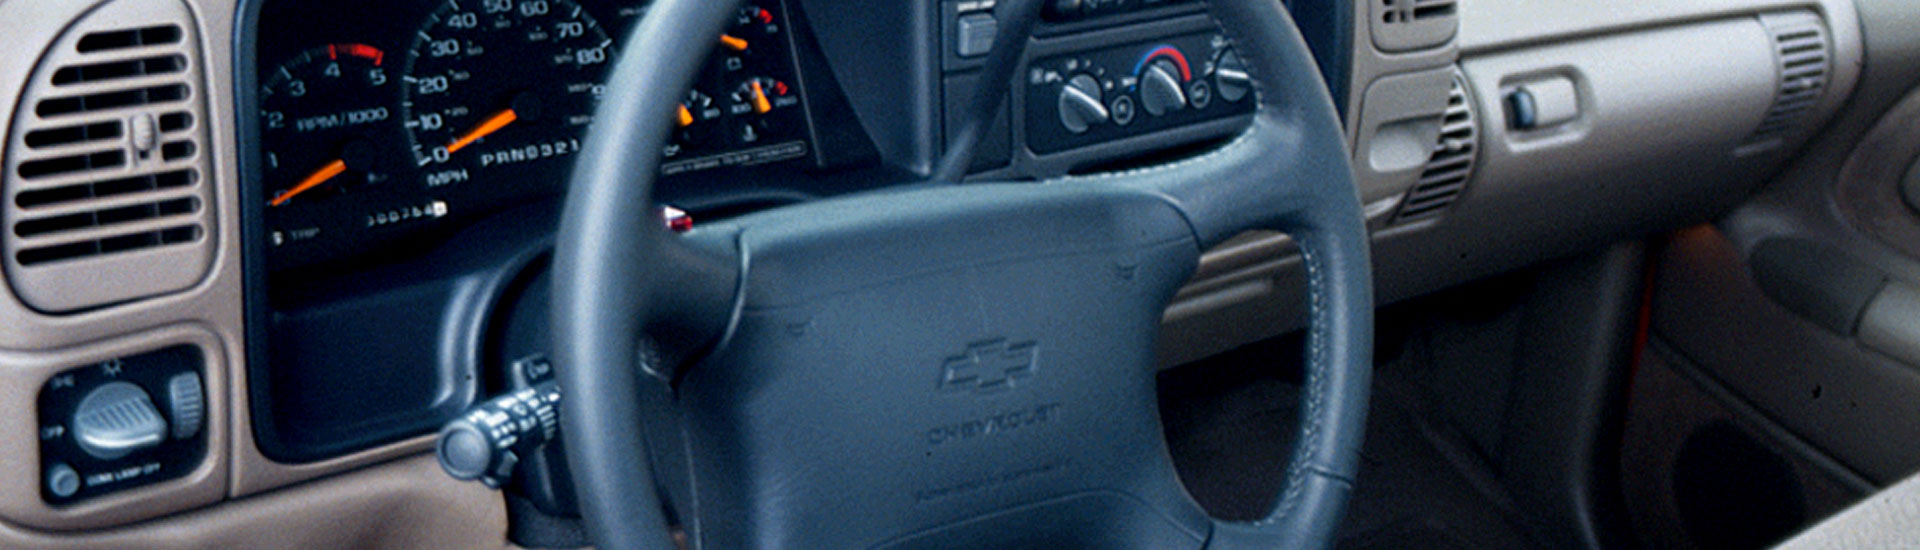 Chevrolet CK Dash Kits